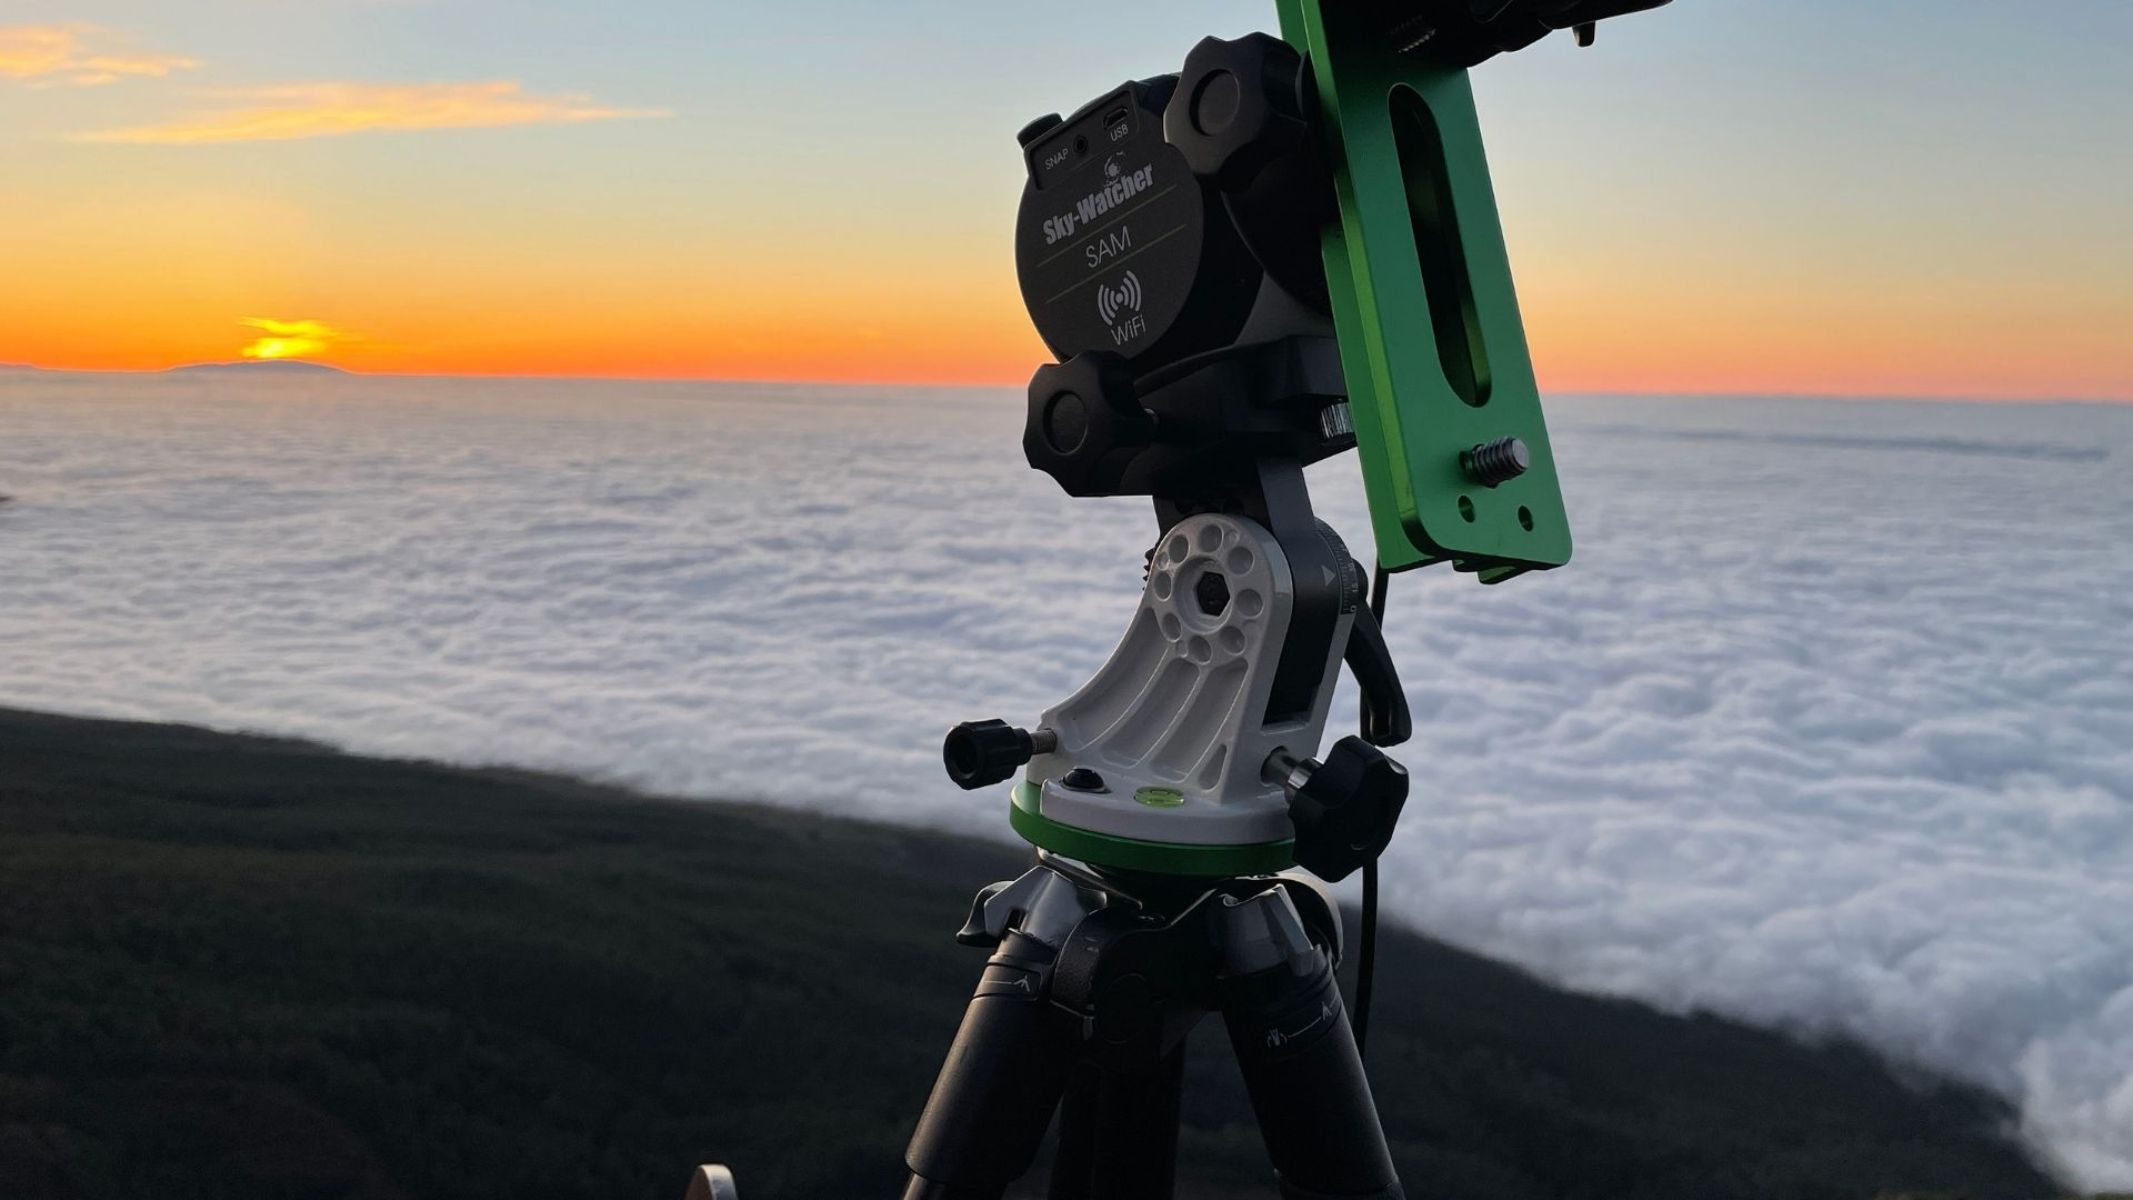 Sky-watcher Star adventurer mini in front of cloud inversion